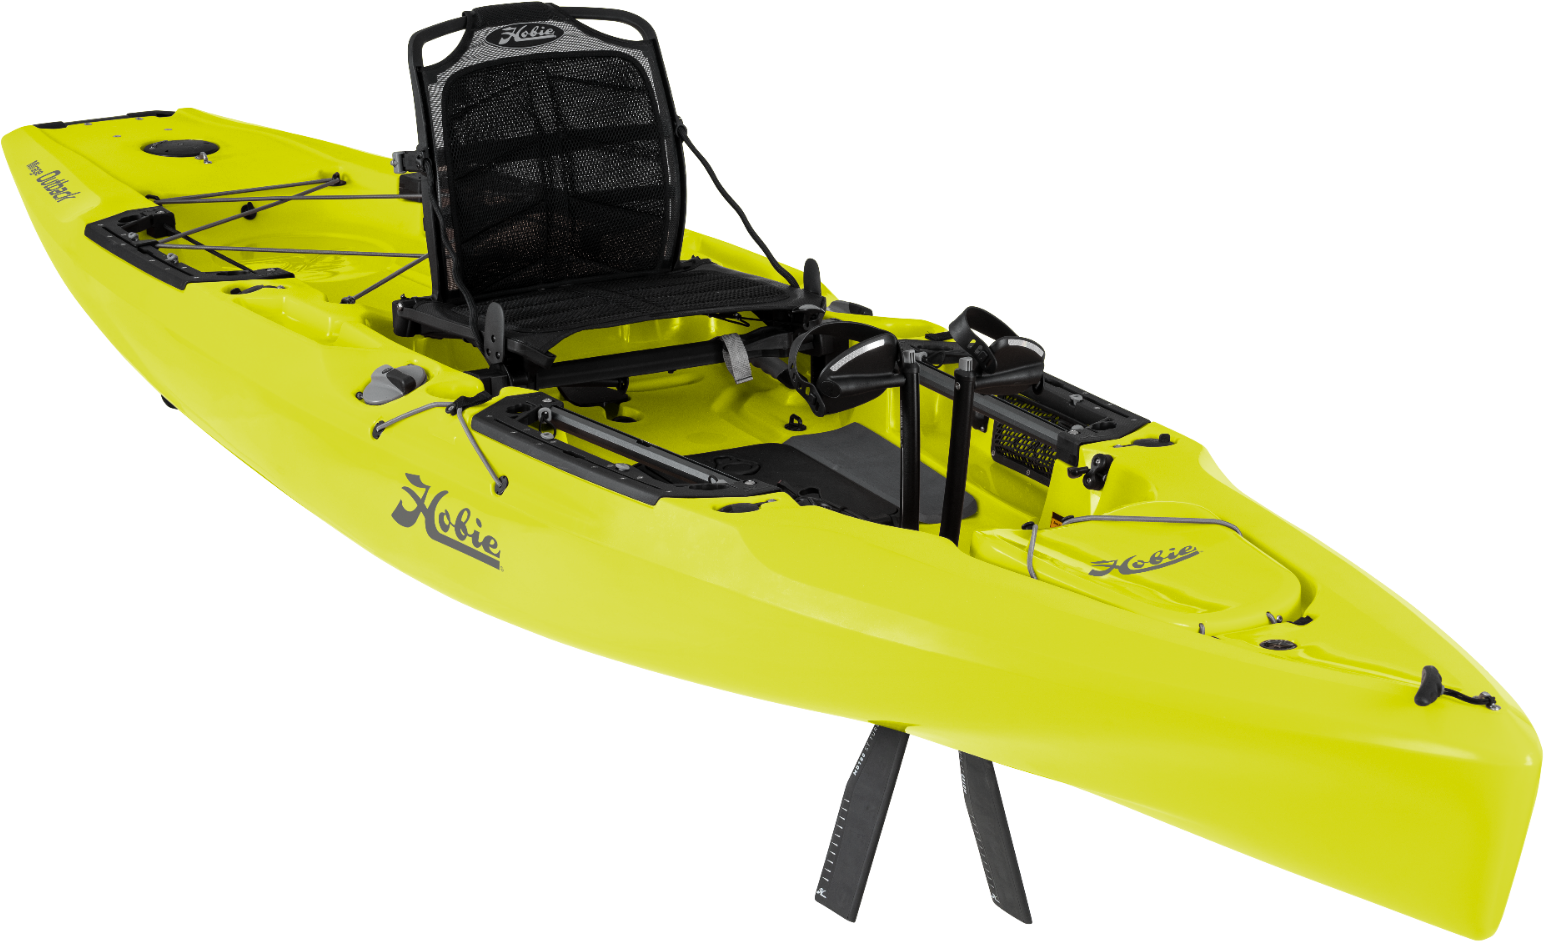 Seagrass Hobie Mirage Outback Kayak 2019 Fishing Kayak - Hobie Mirage Outback 2019 (1600x997), Png Download